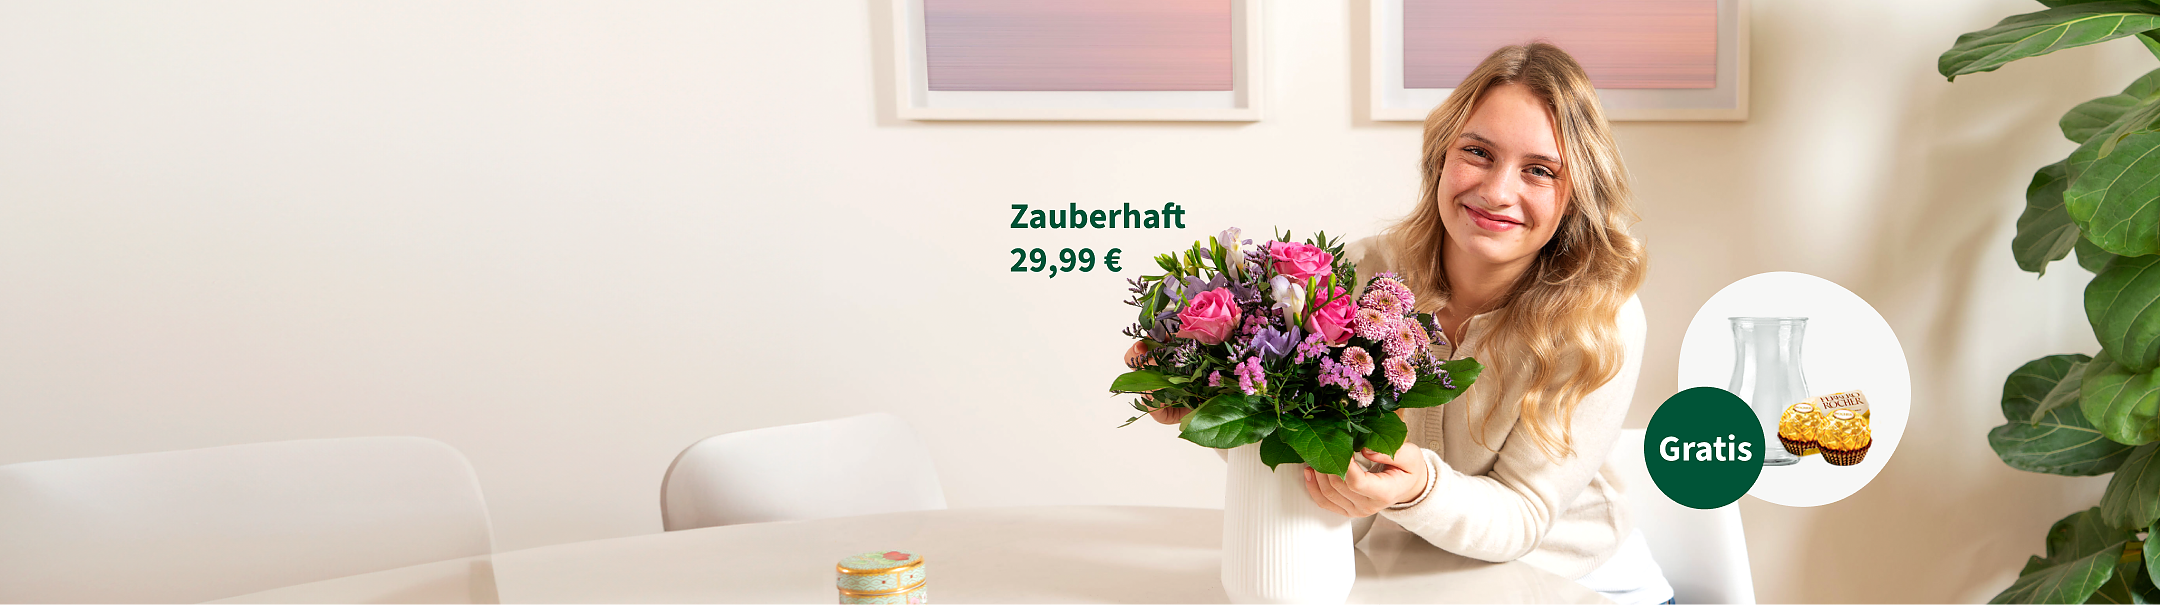 Flower Bouquet Zauberhauft € 29.99